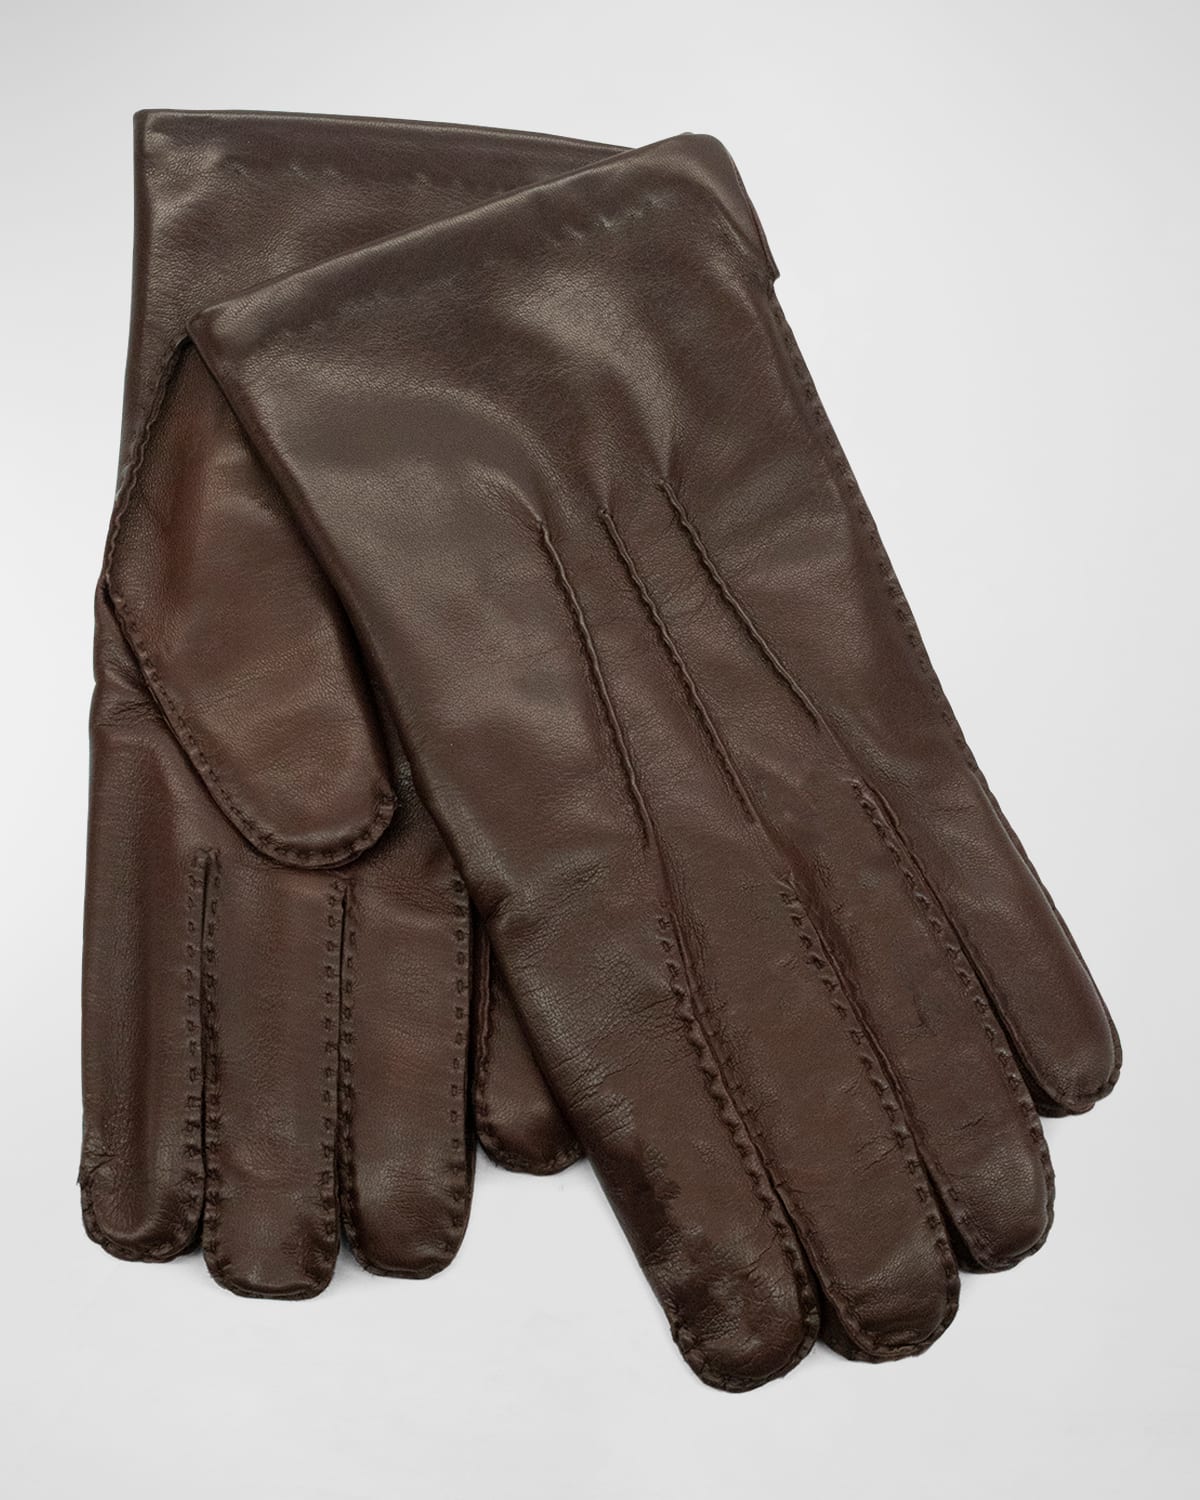 Bergdorf Goodman Men's Merino Wool-Lined Leather Gloves, Black, Men's, 8.5in, Gloves Leather Gloves